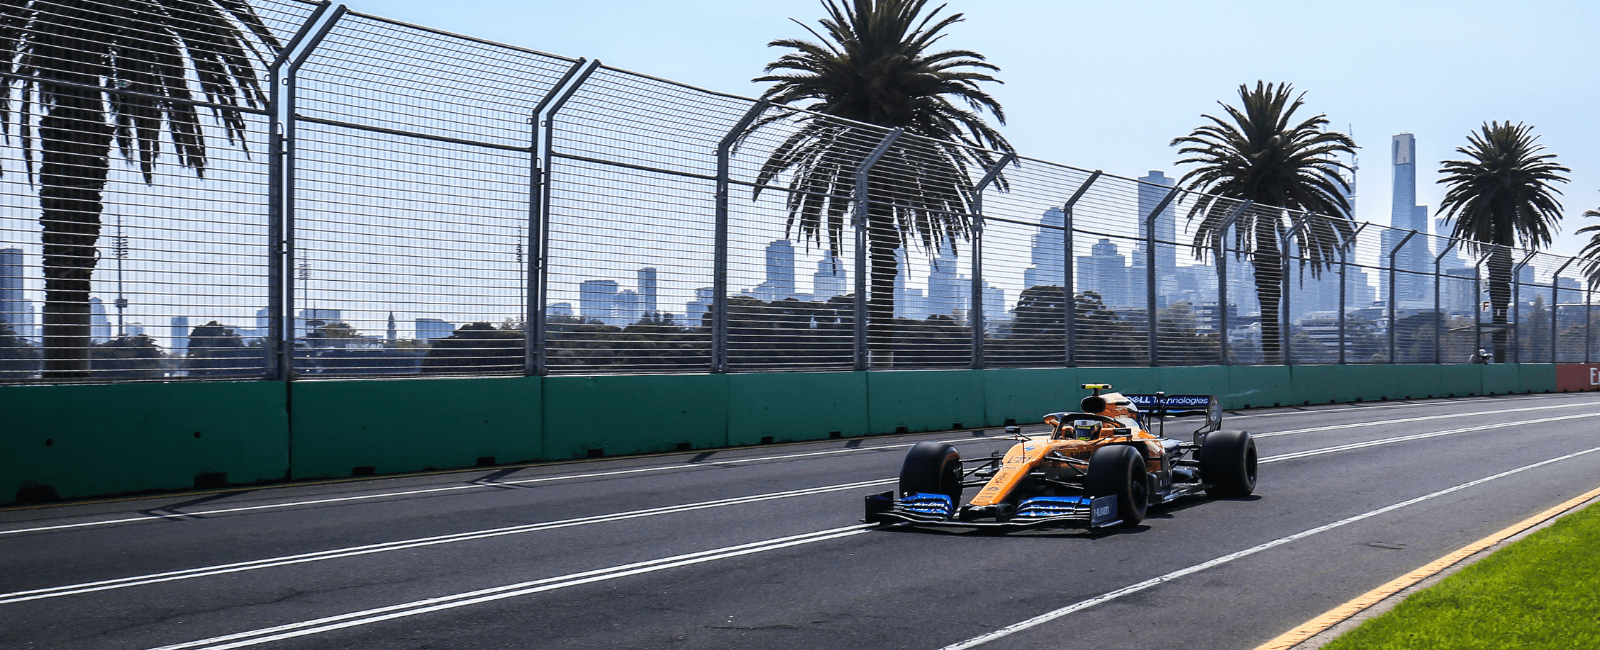 McLaren from 2019 Australian Grand Prix